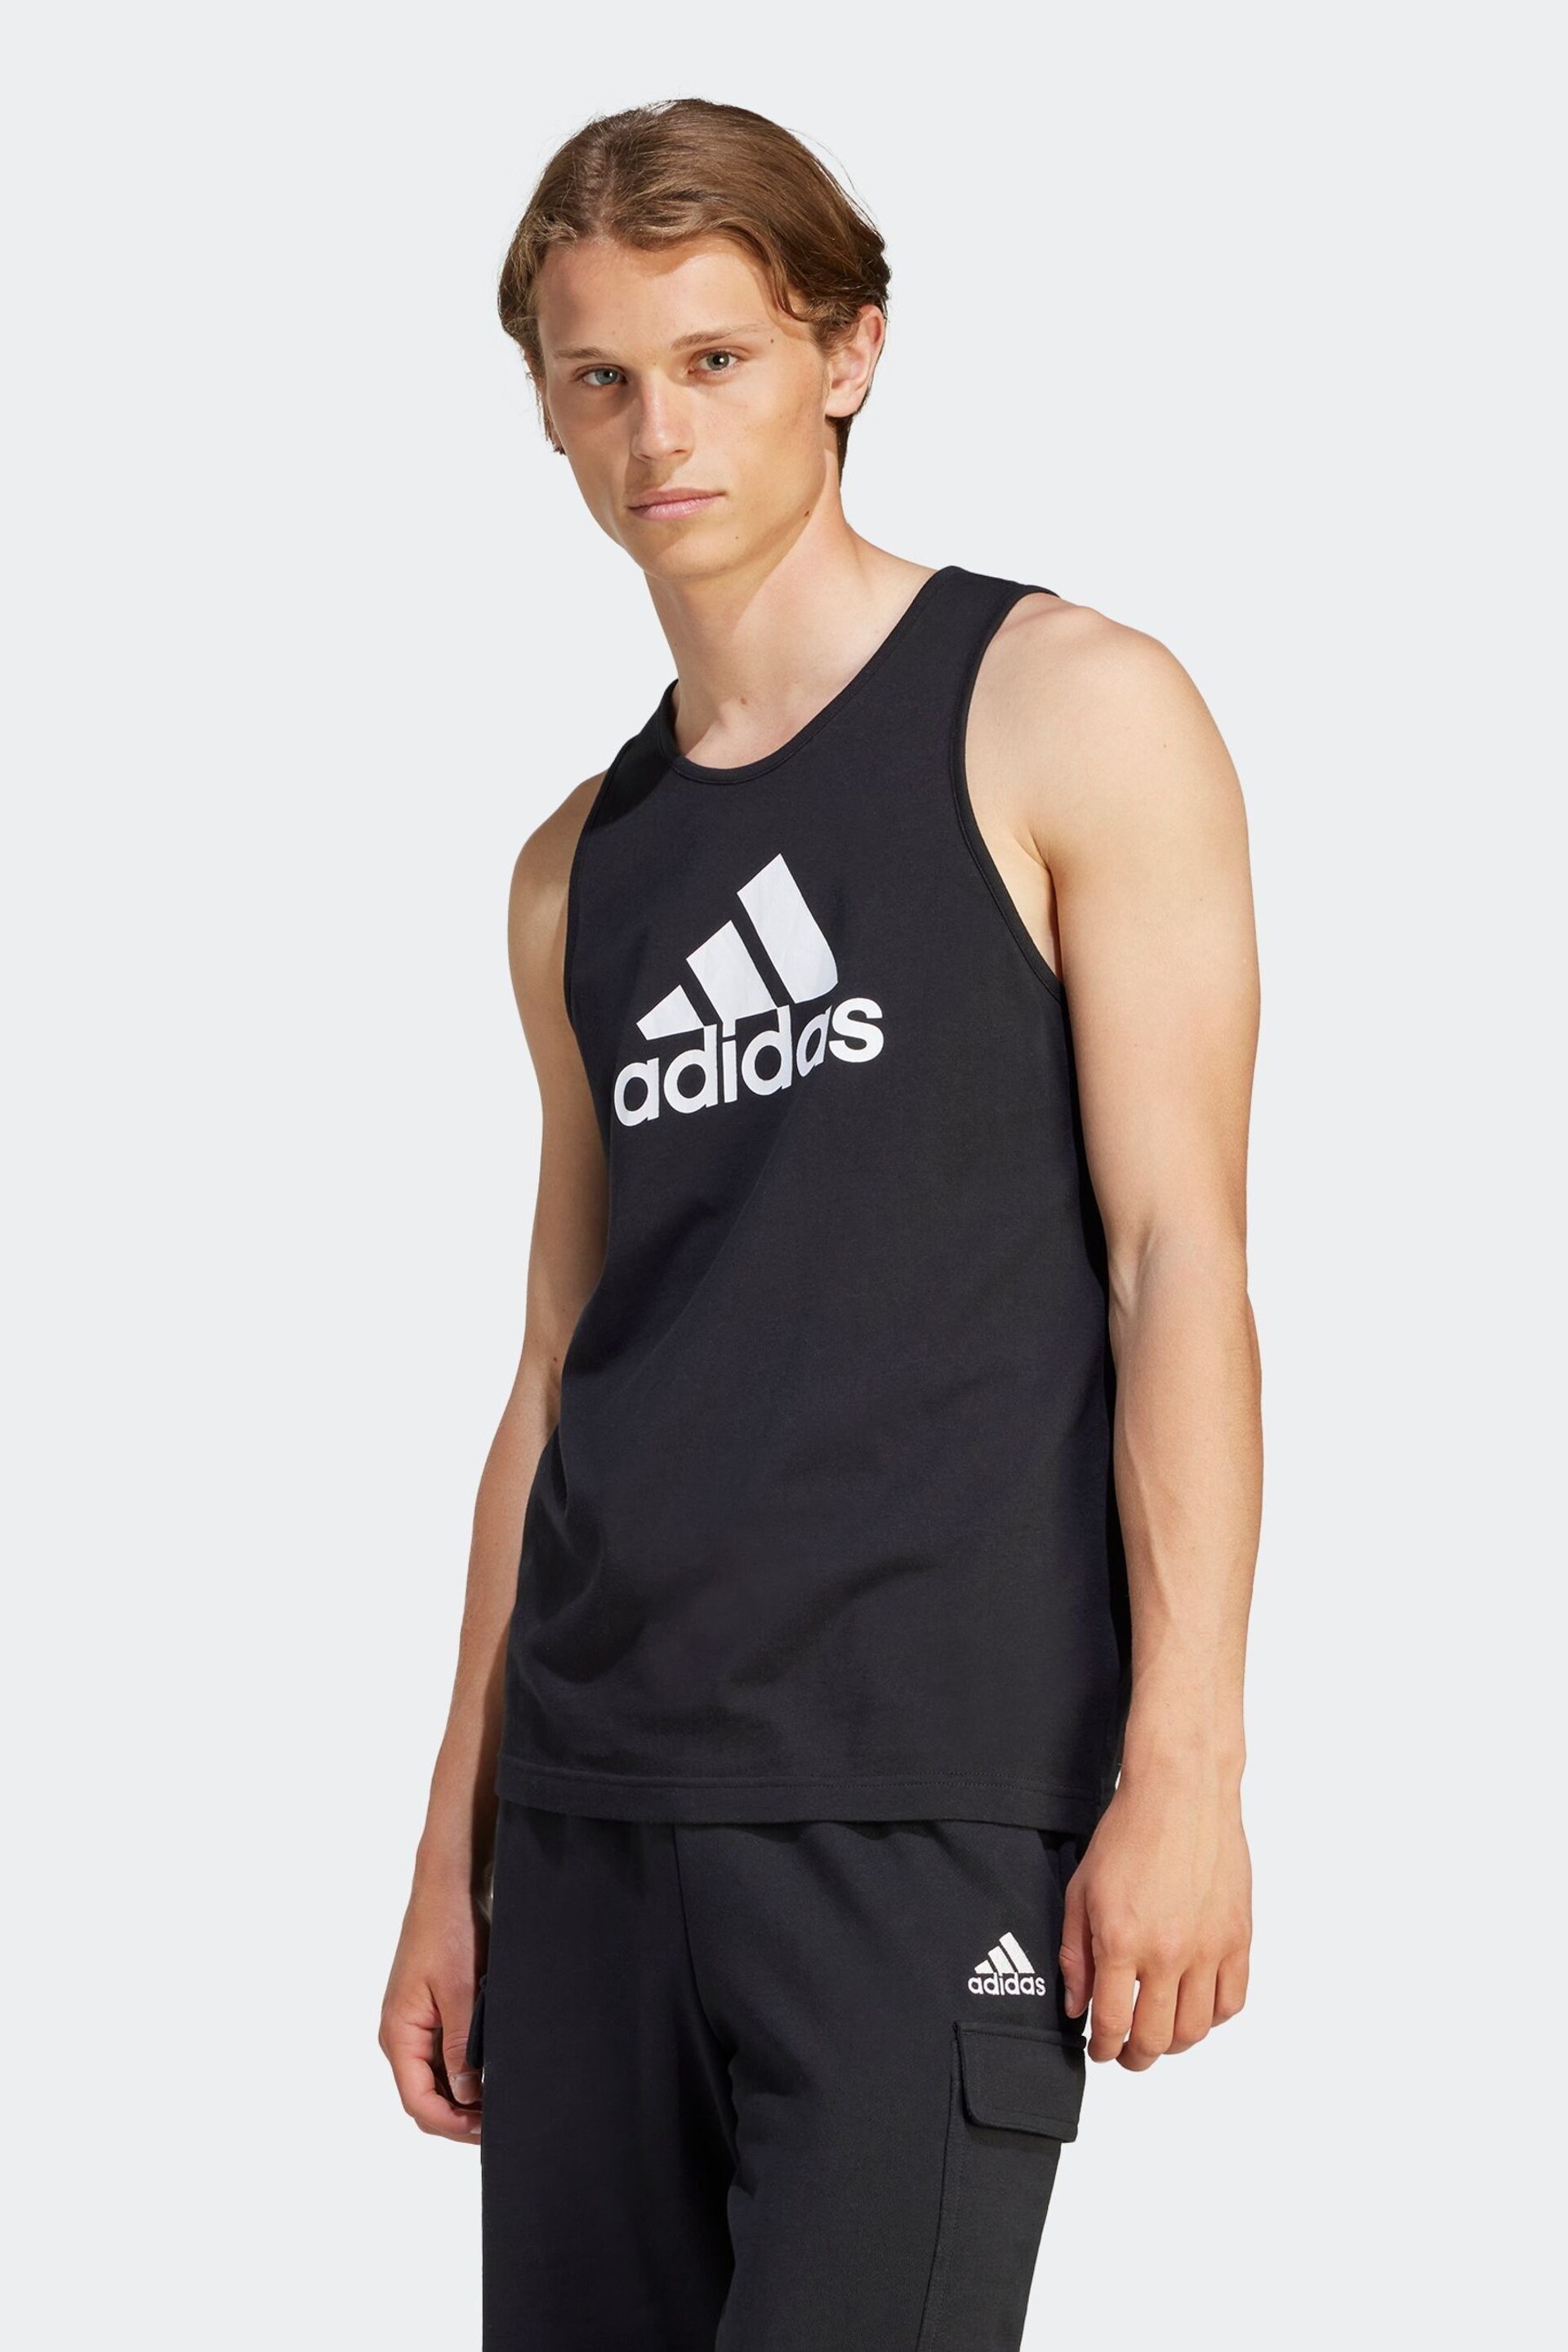 adidas Black/White Big Logo Vest Top - Image 1 of 7